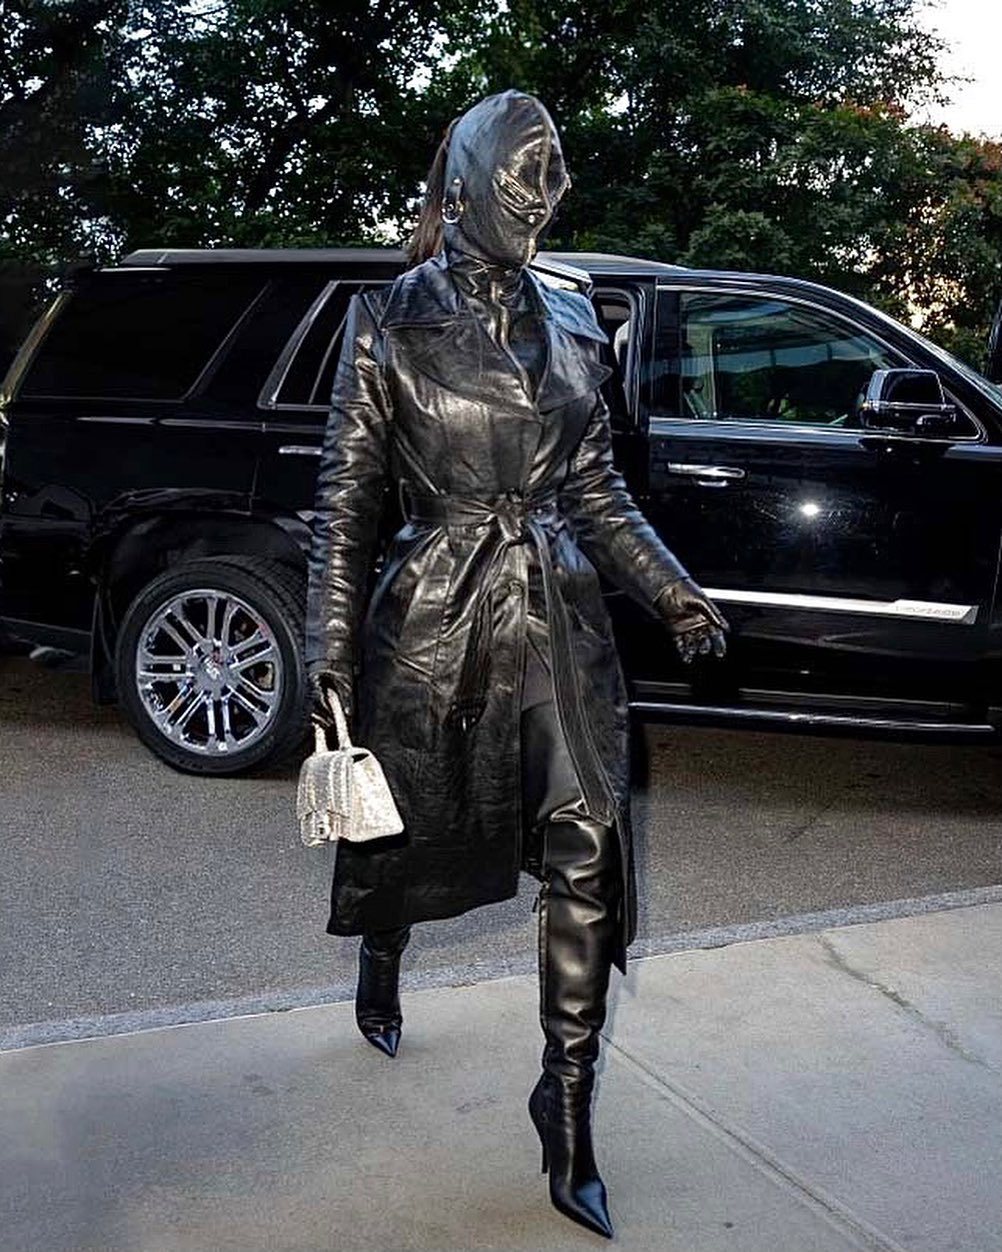 Fetish fashion is back thanks to Kim Kardashian photo